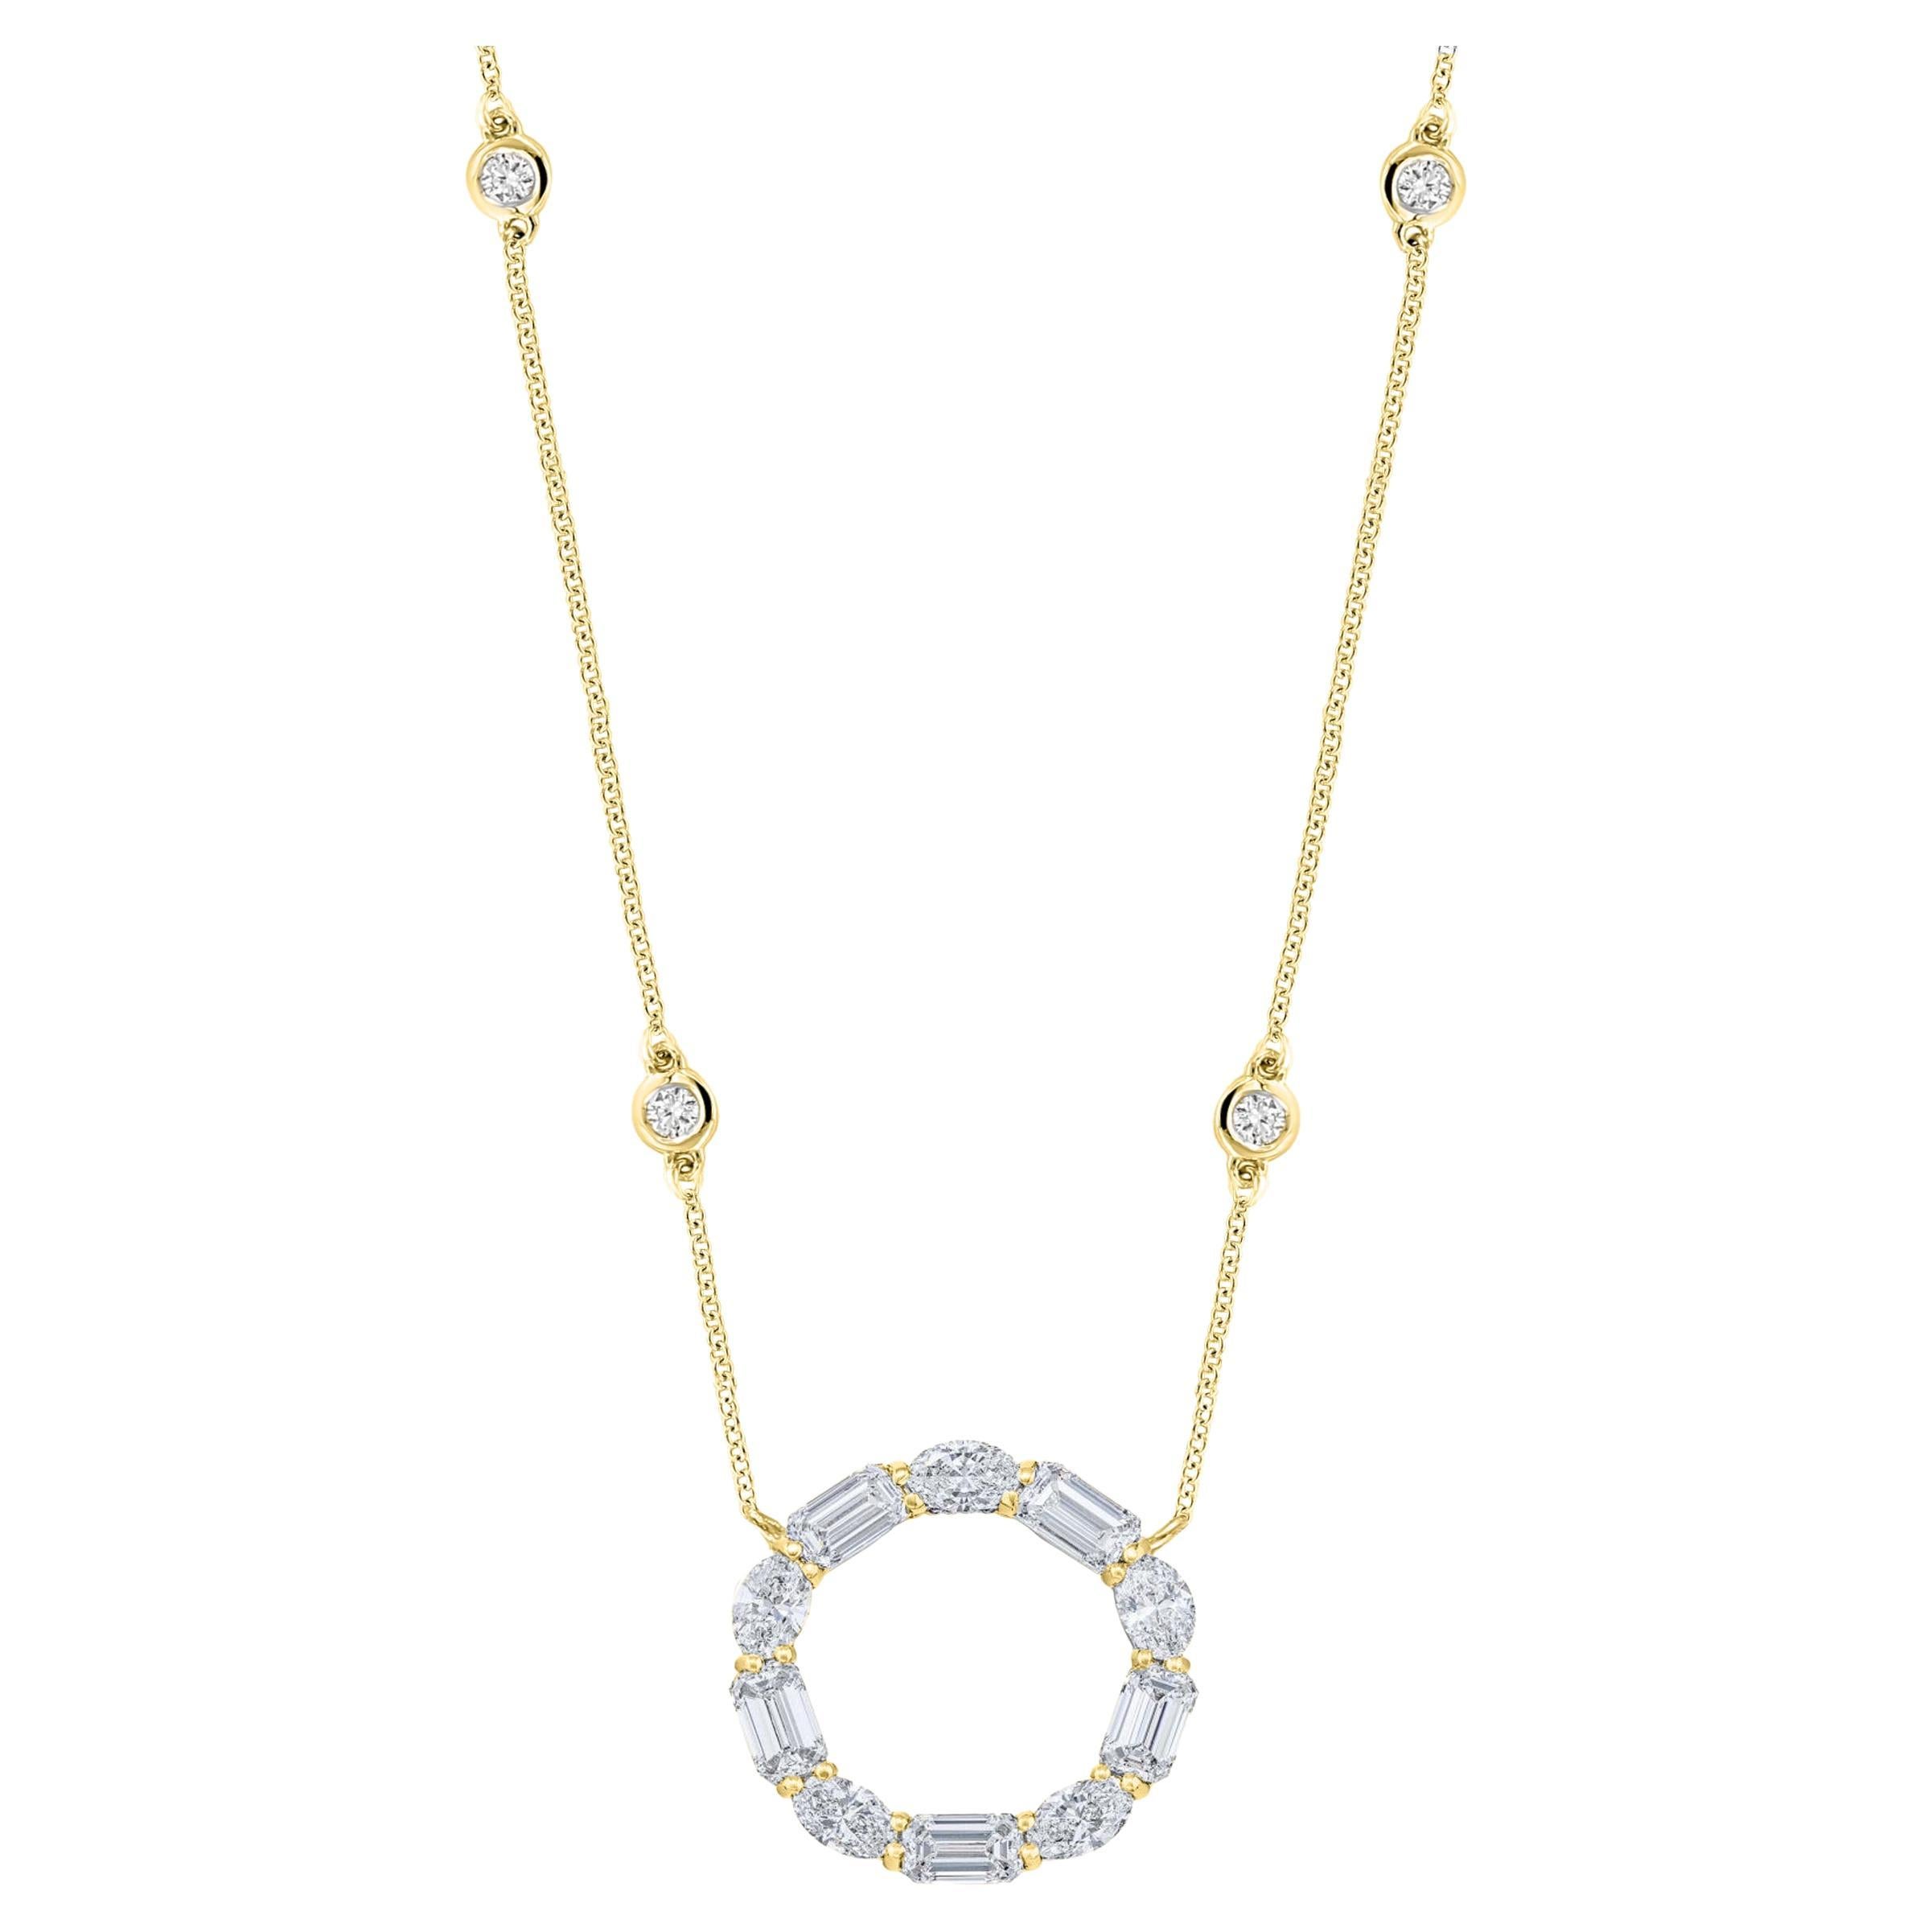 1.89 Carat Mixed Shape Diamond Circle Pendant Necklace in 14k Yellow Gold